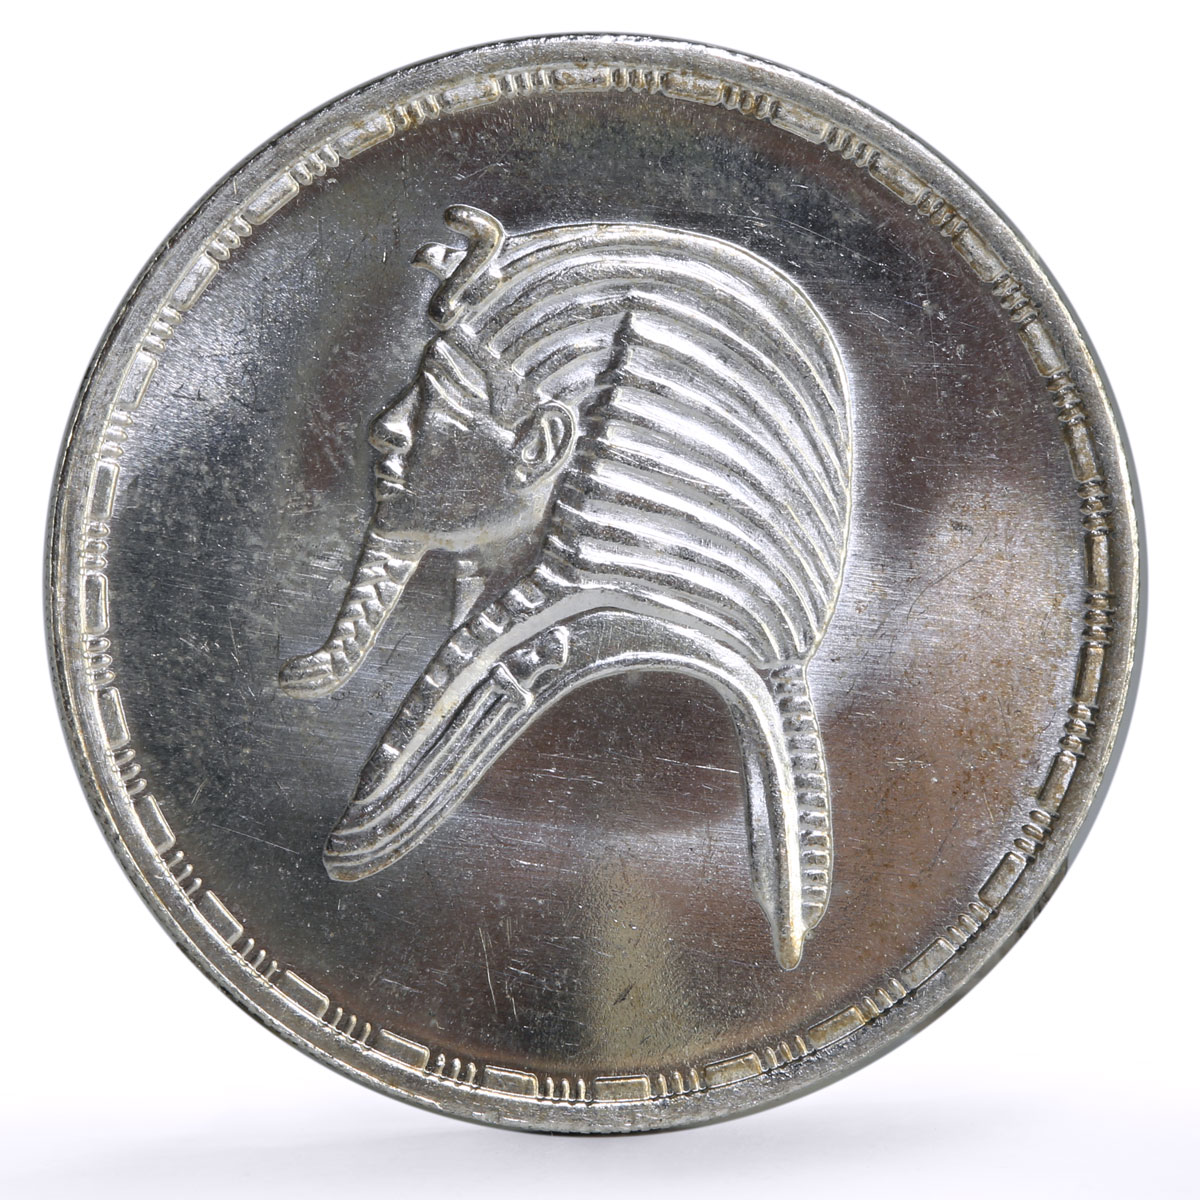 Egypt 5 pounds Treasures Pharaoh Tutankhamen Tutankhamun Mask silver coin 1985